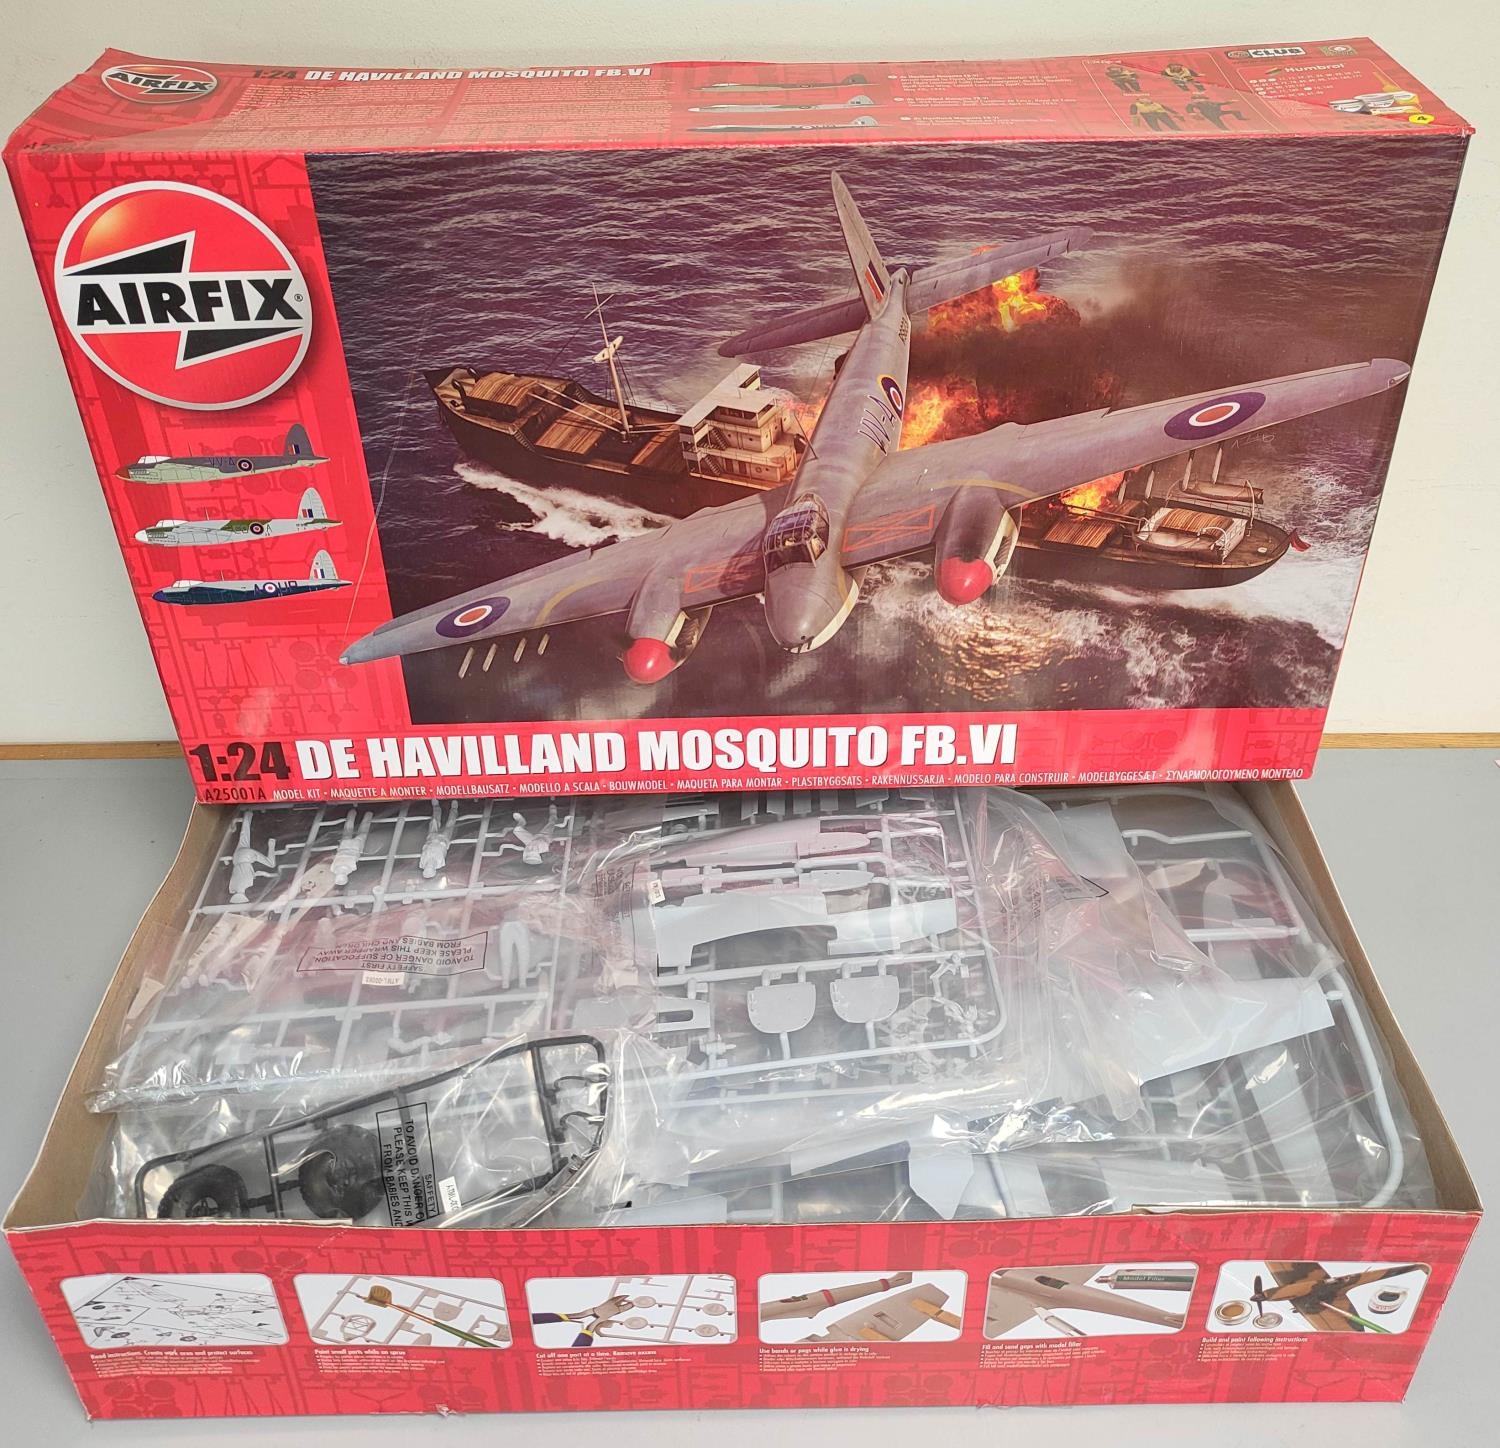 Airfix. Boxed 1:24 scale De Havilland Mosquito FB.VI model. Kit no. A25001A. Complete and components